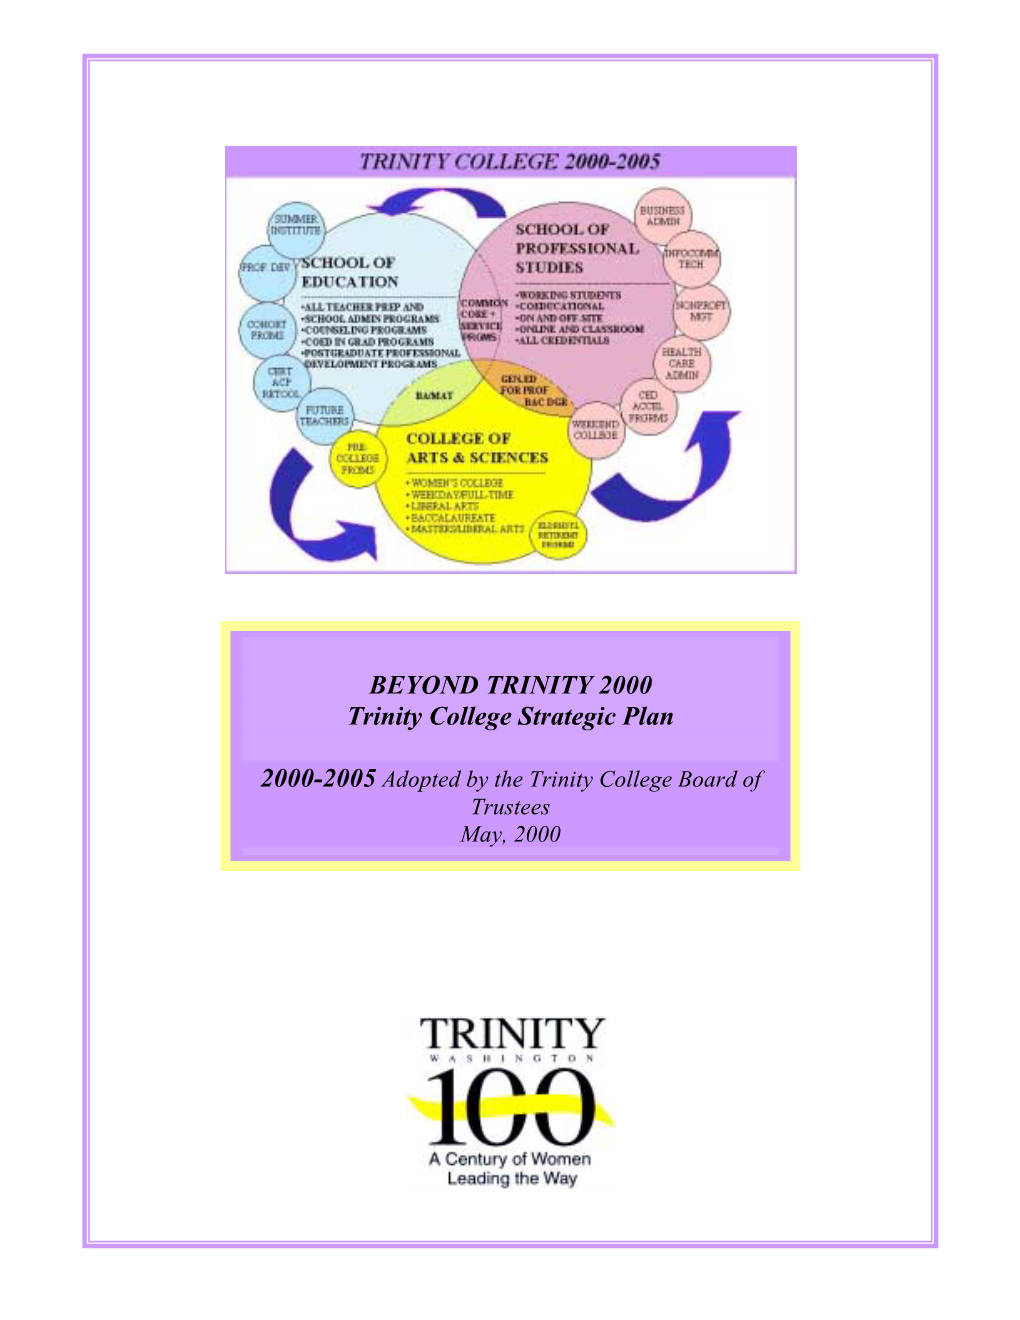 BEYOND TRINITY 2000 Trinity College Strategic Plan